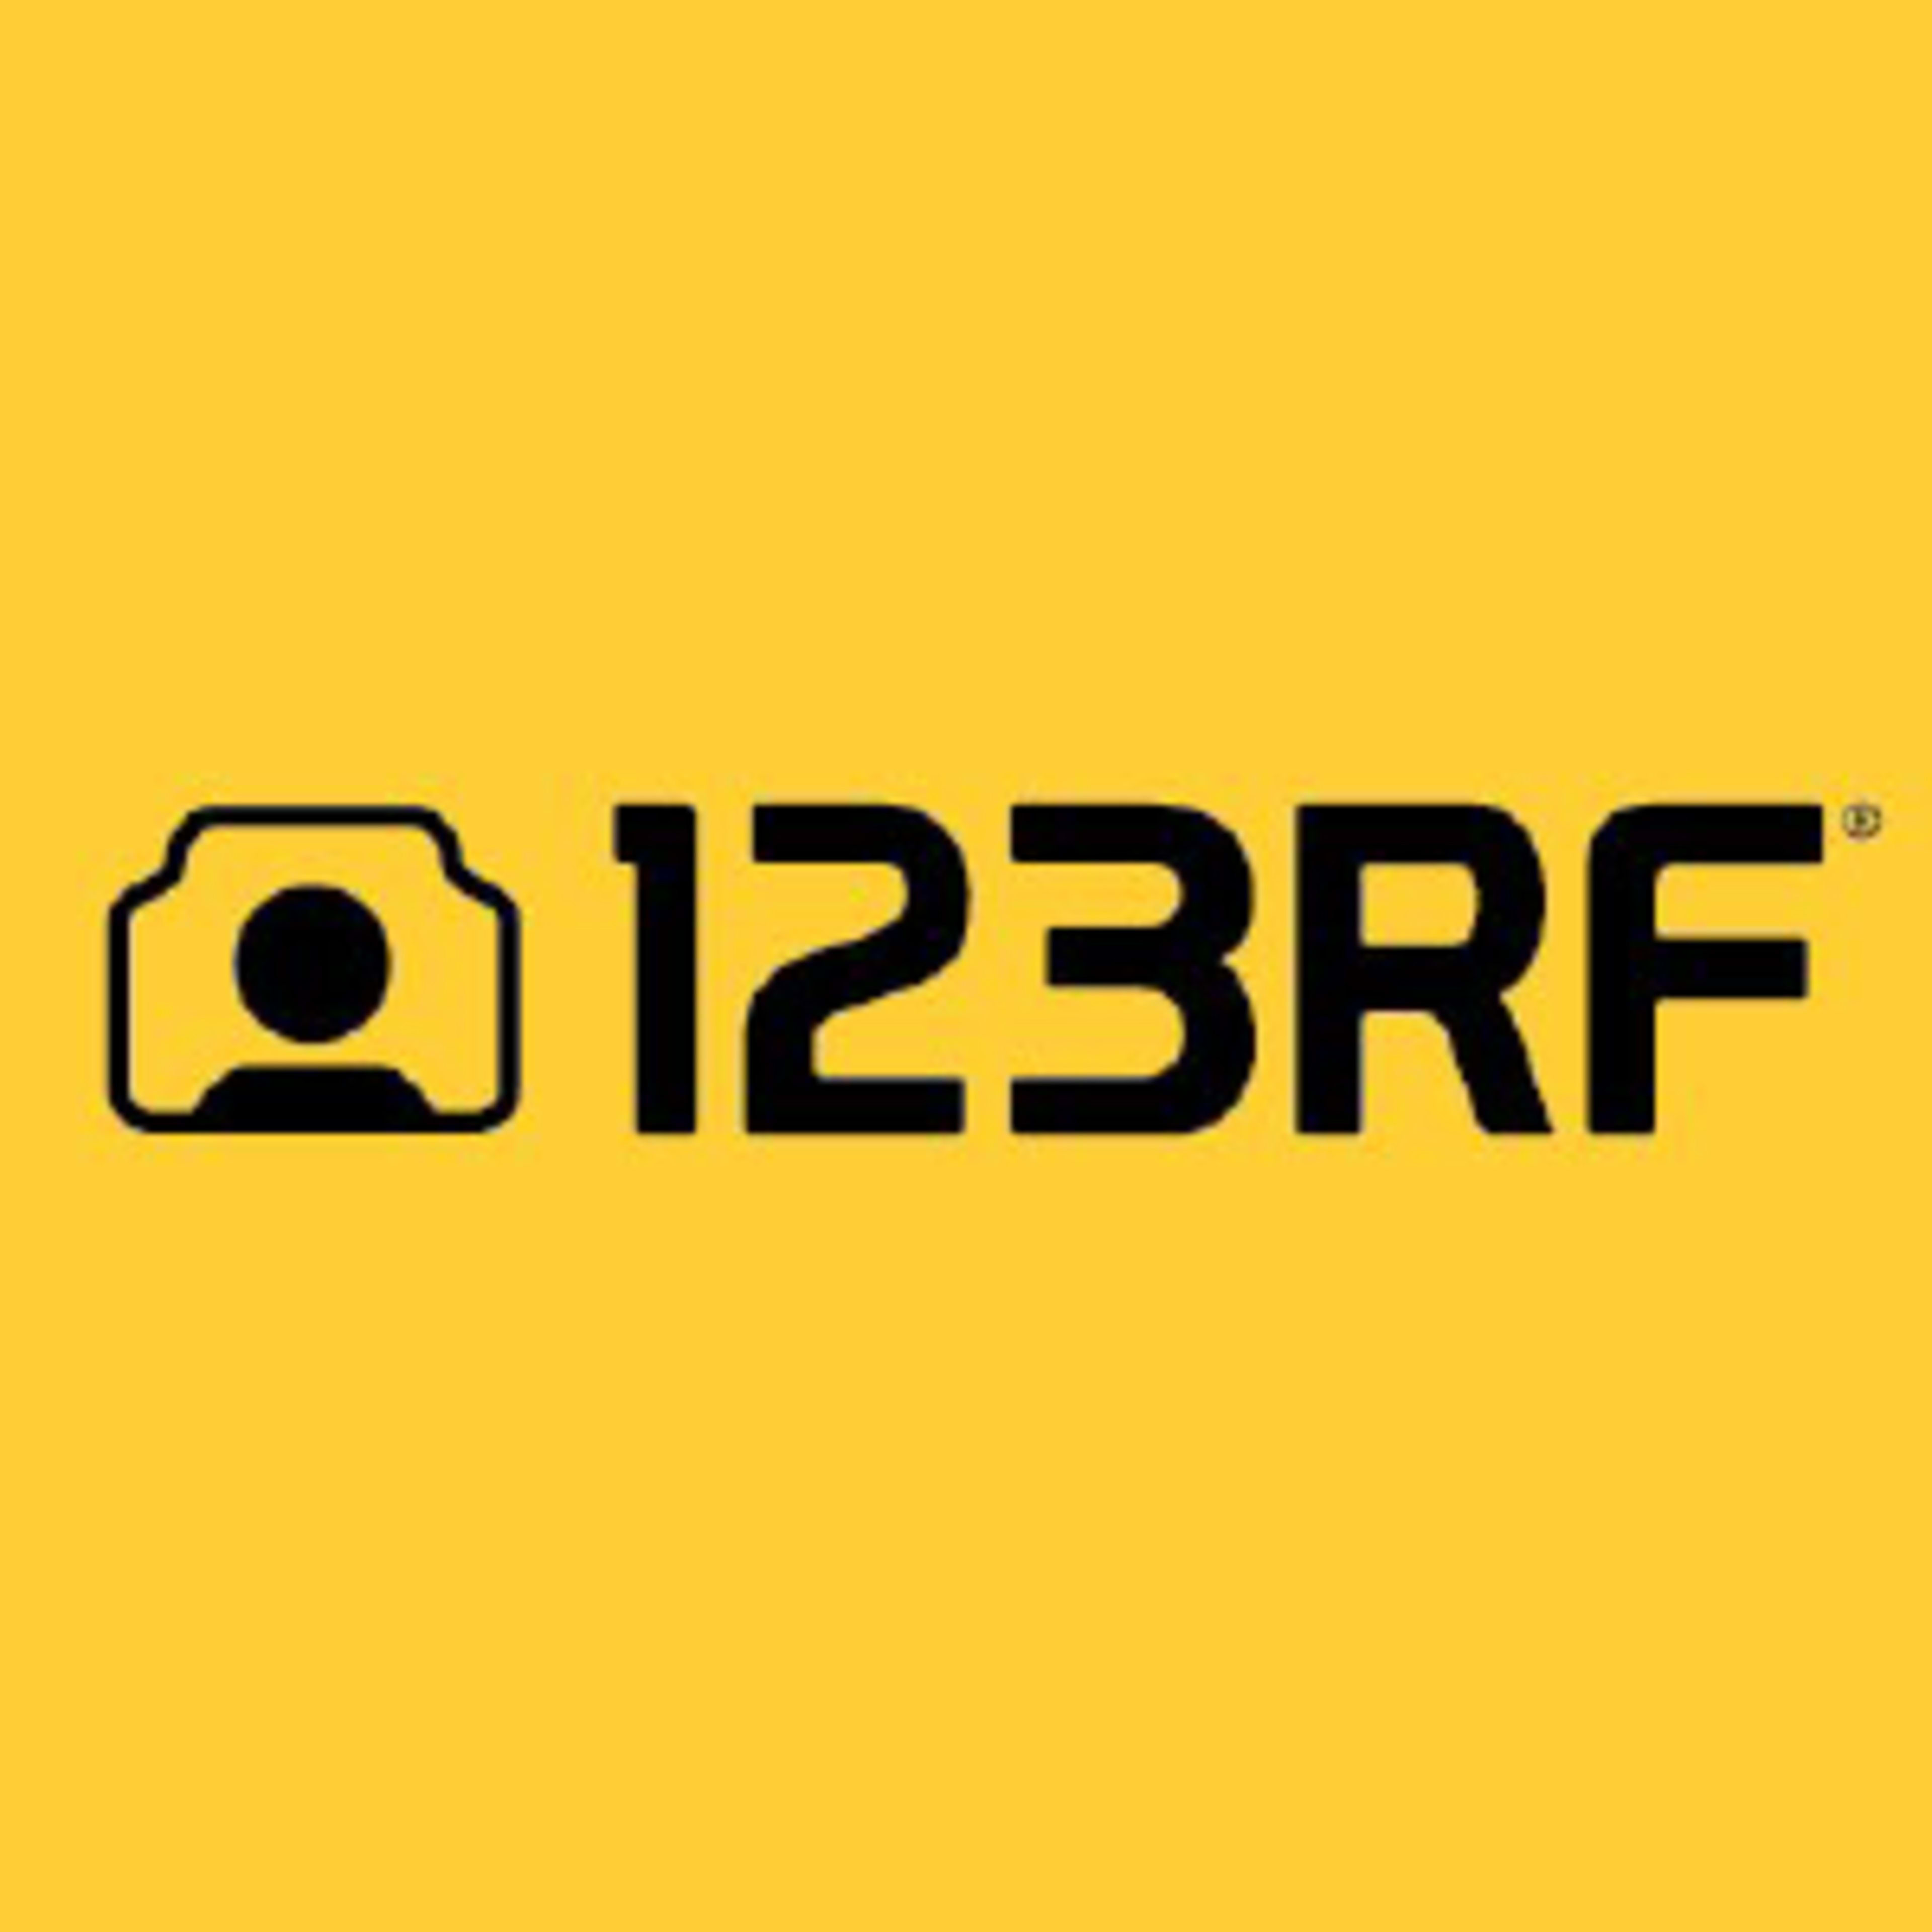 123RF Stock Photo Subscription Code